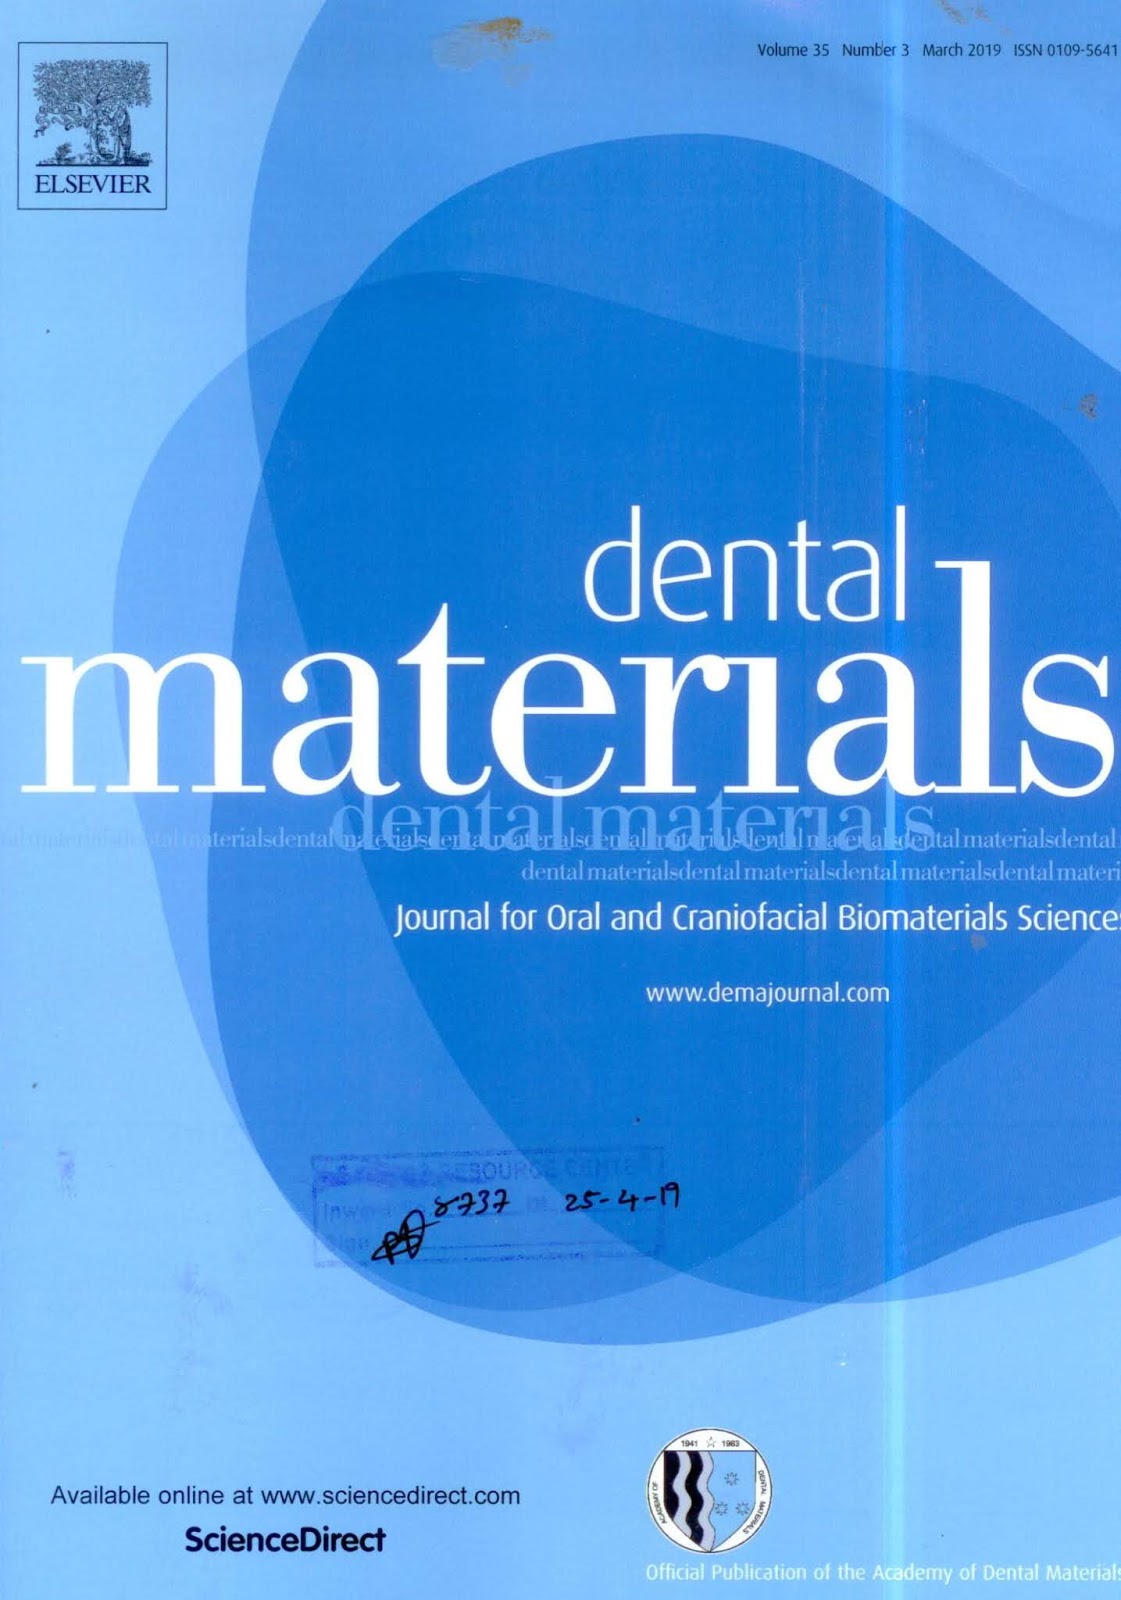 https://www.sciencedirect.com/journal/dental-materials/vol/35/issue/3